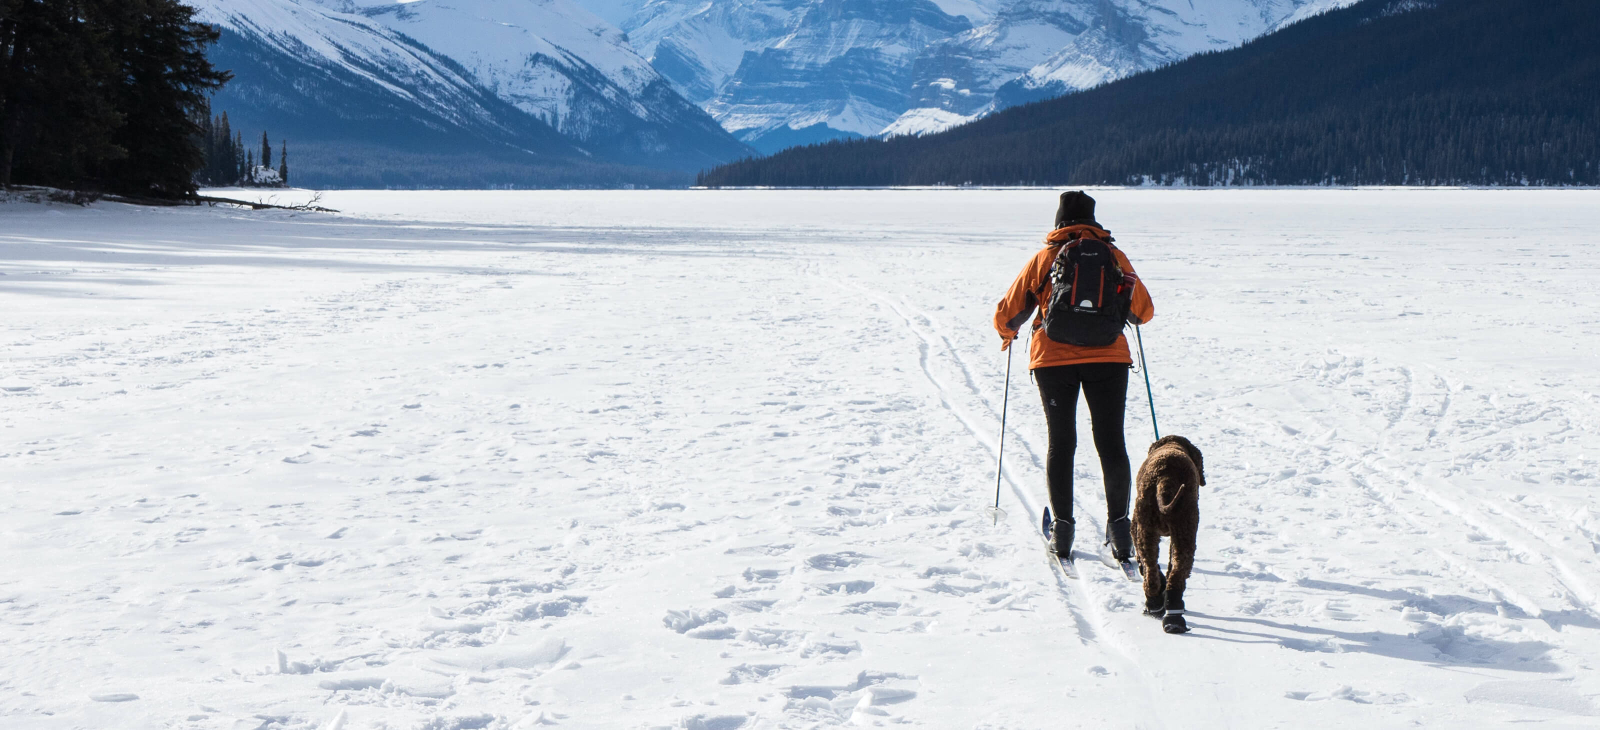 Full-Width - Winter Cross-Country Skiing Dog Unsplash Jasper Guy